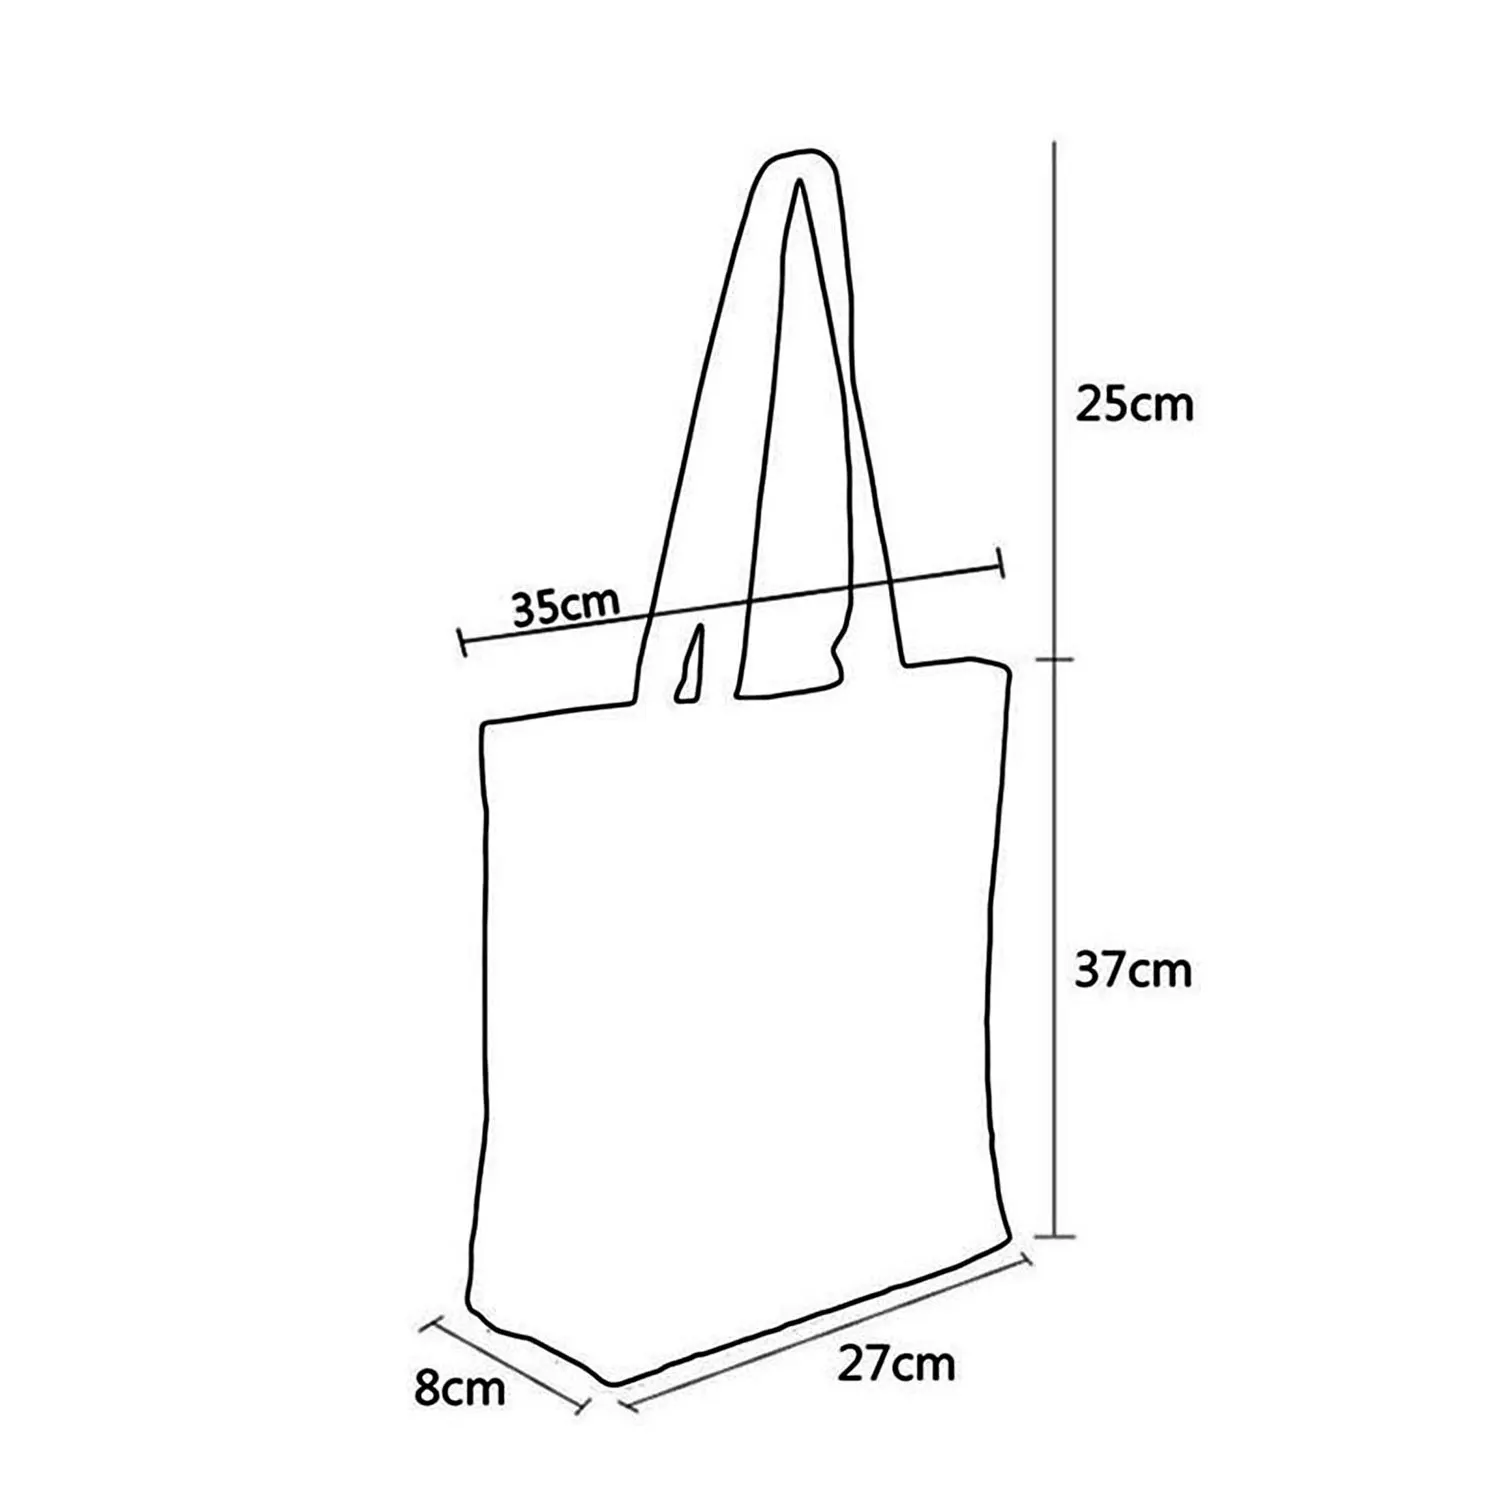 The Lion King Printed Handbag Disney Women Shoulder Bag Fashion Eco Reusable Shopping Bag High Capacity Beach Bag Cartoon Tote women's bags on sale	